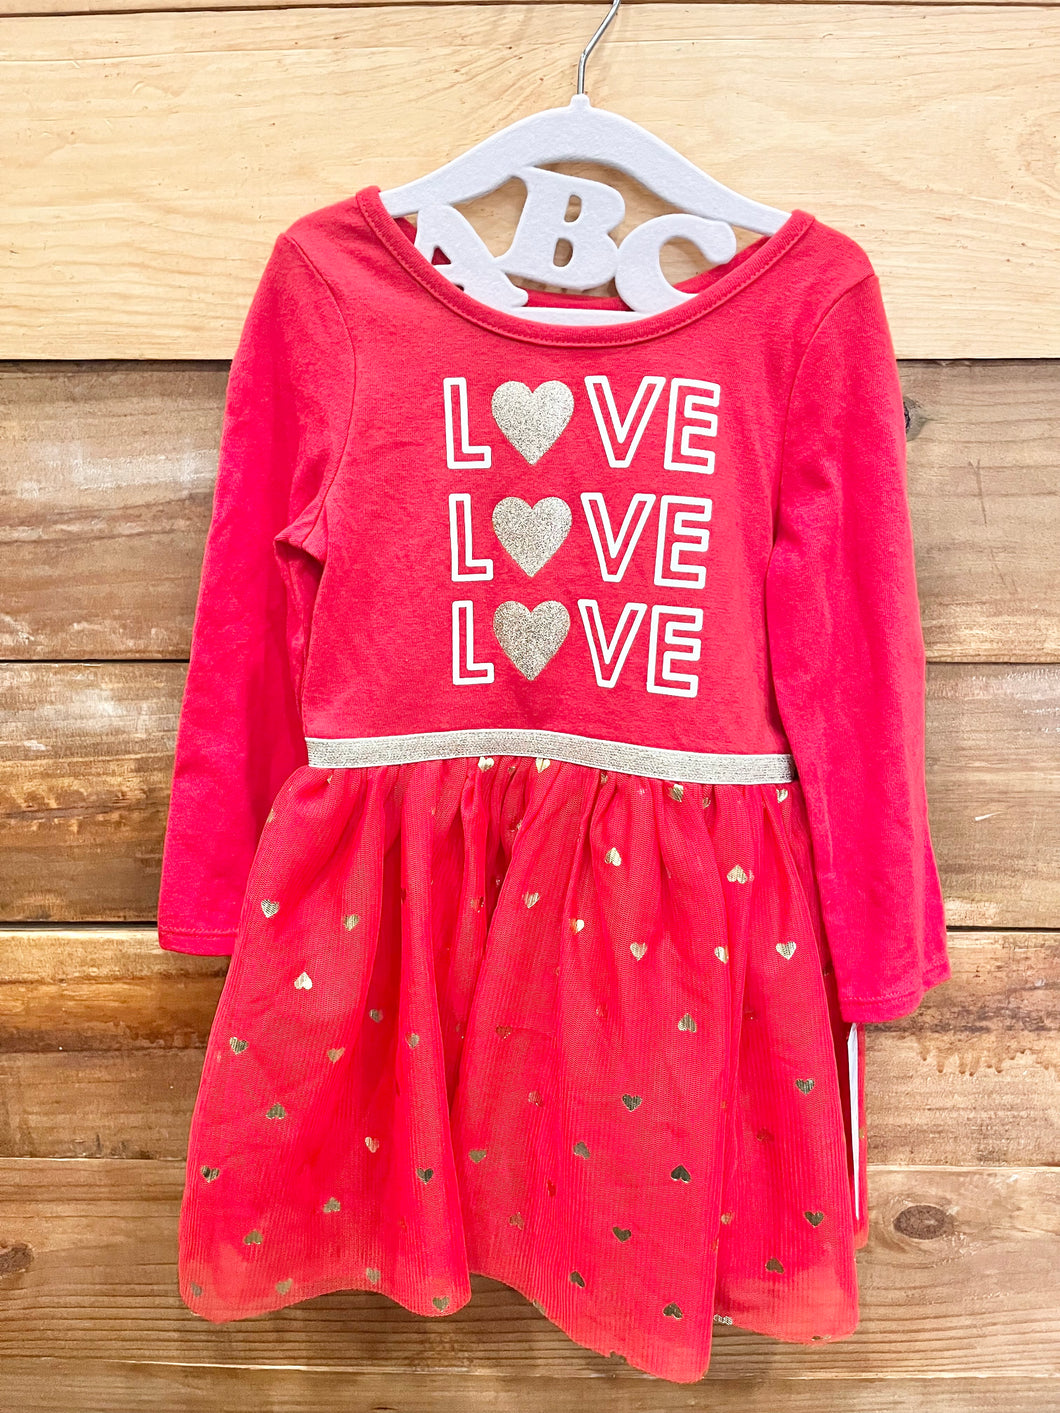 Cat & Jack Red Love Dress Size 2T